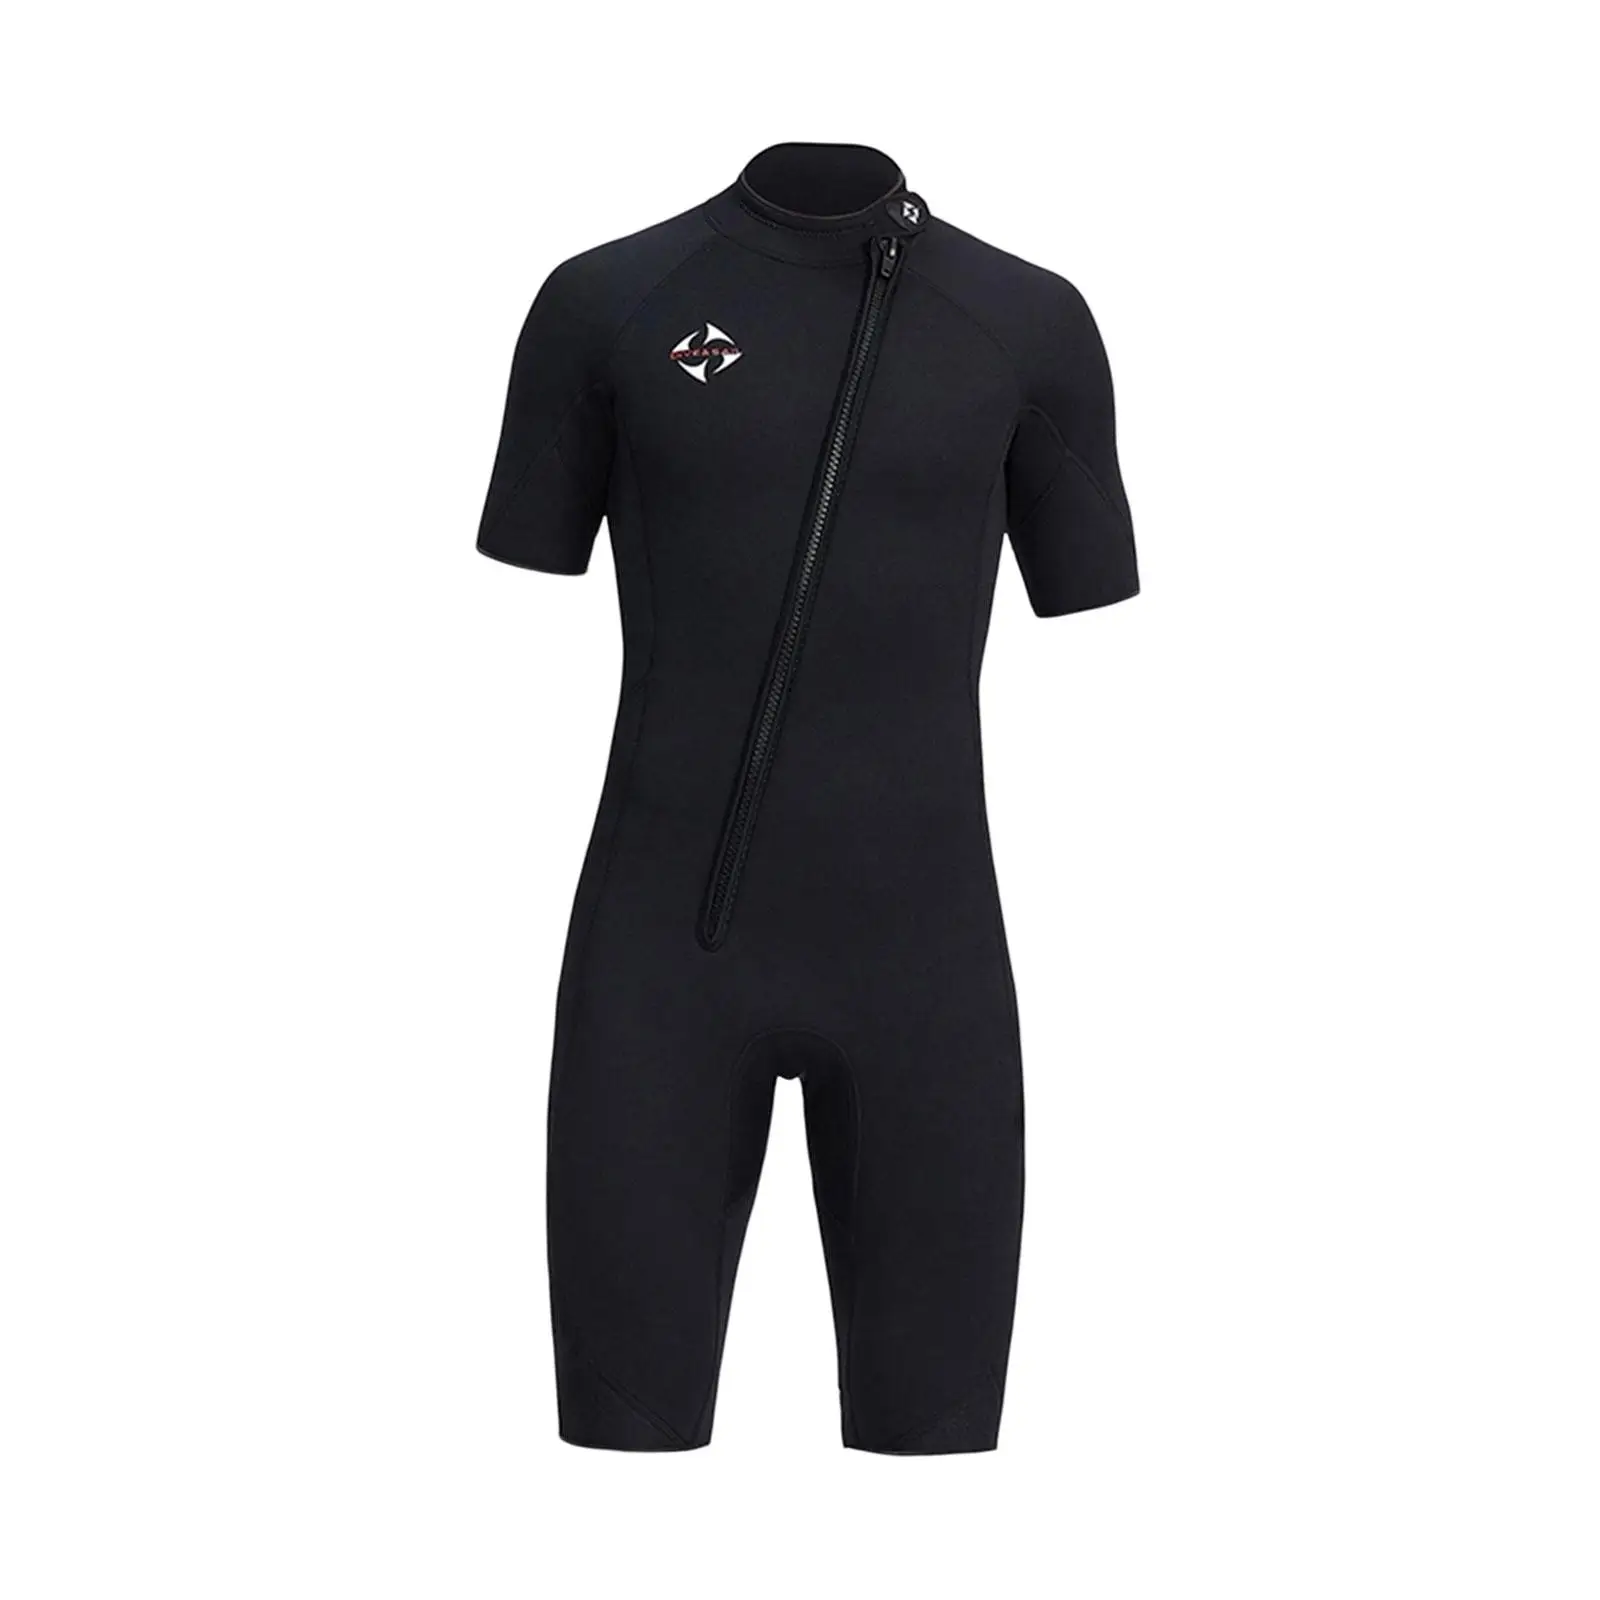 3mm Neoprene Men Wetsuit Diving Suit Keep Warm Swimsuit Front Zip Wet Suit for Snorkeling Surfing Kayaking Diving Water Sports